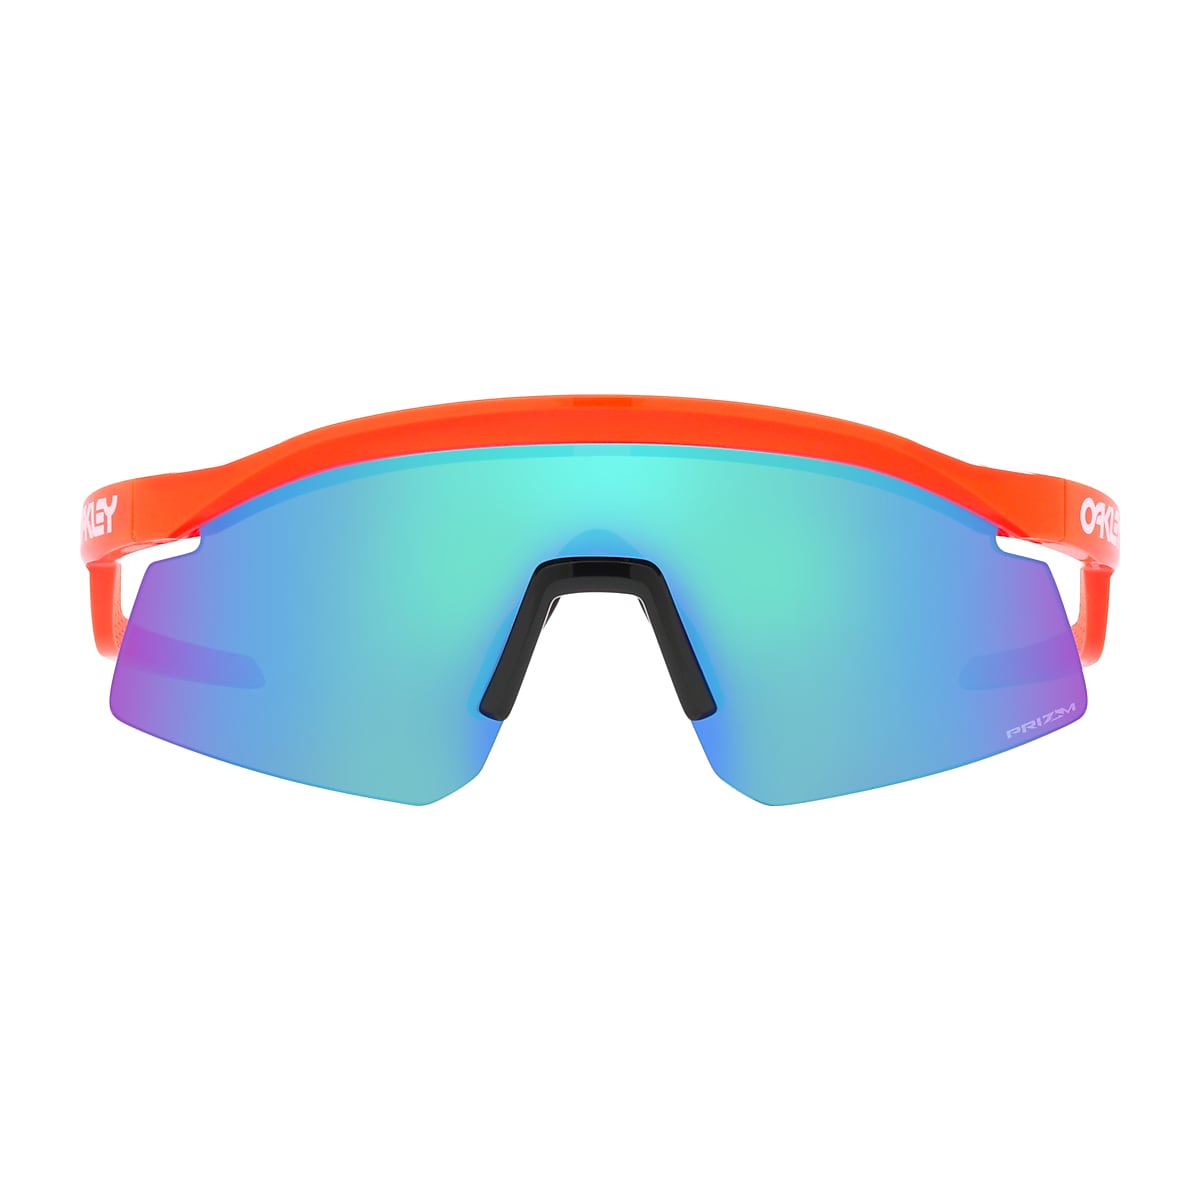 Hydra Prizm Sapphire Lenses, Neon Orange Frame Sunglasses | Oakley® US